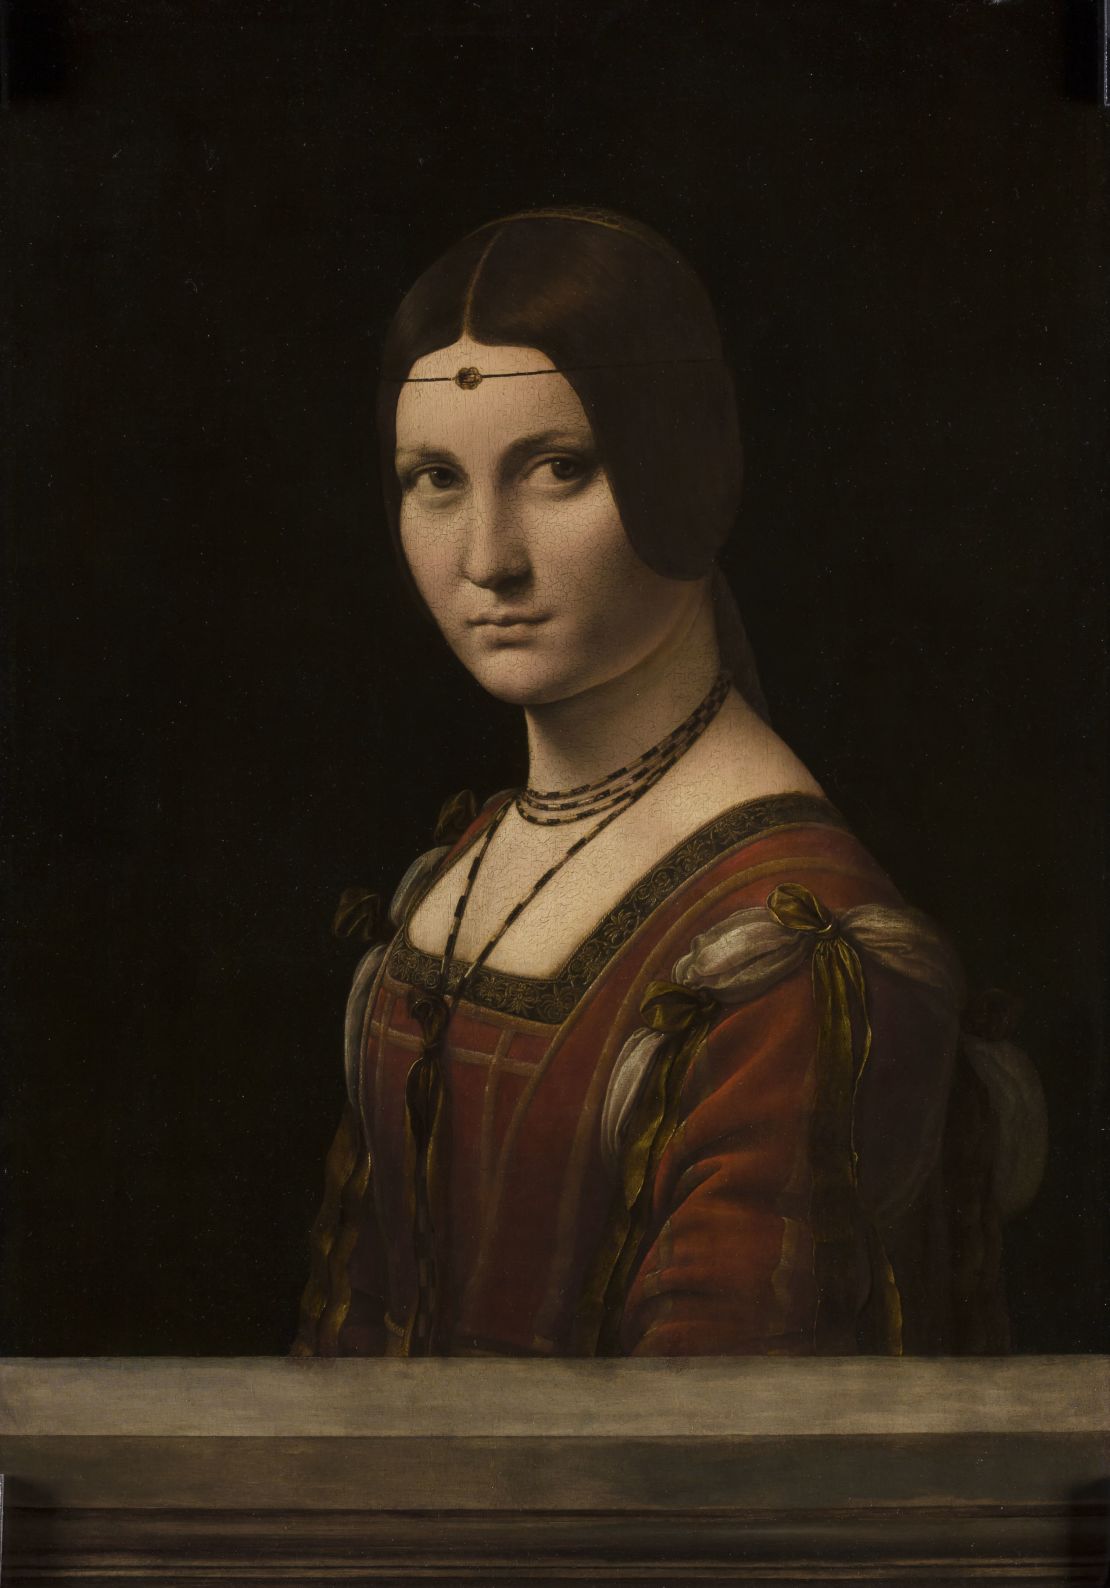 "La Belle Ferroniere" (1495-1499) by Leonardo da Vinci